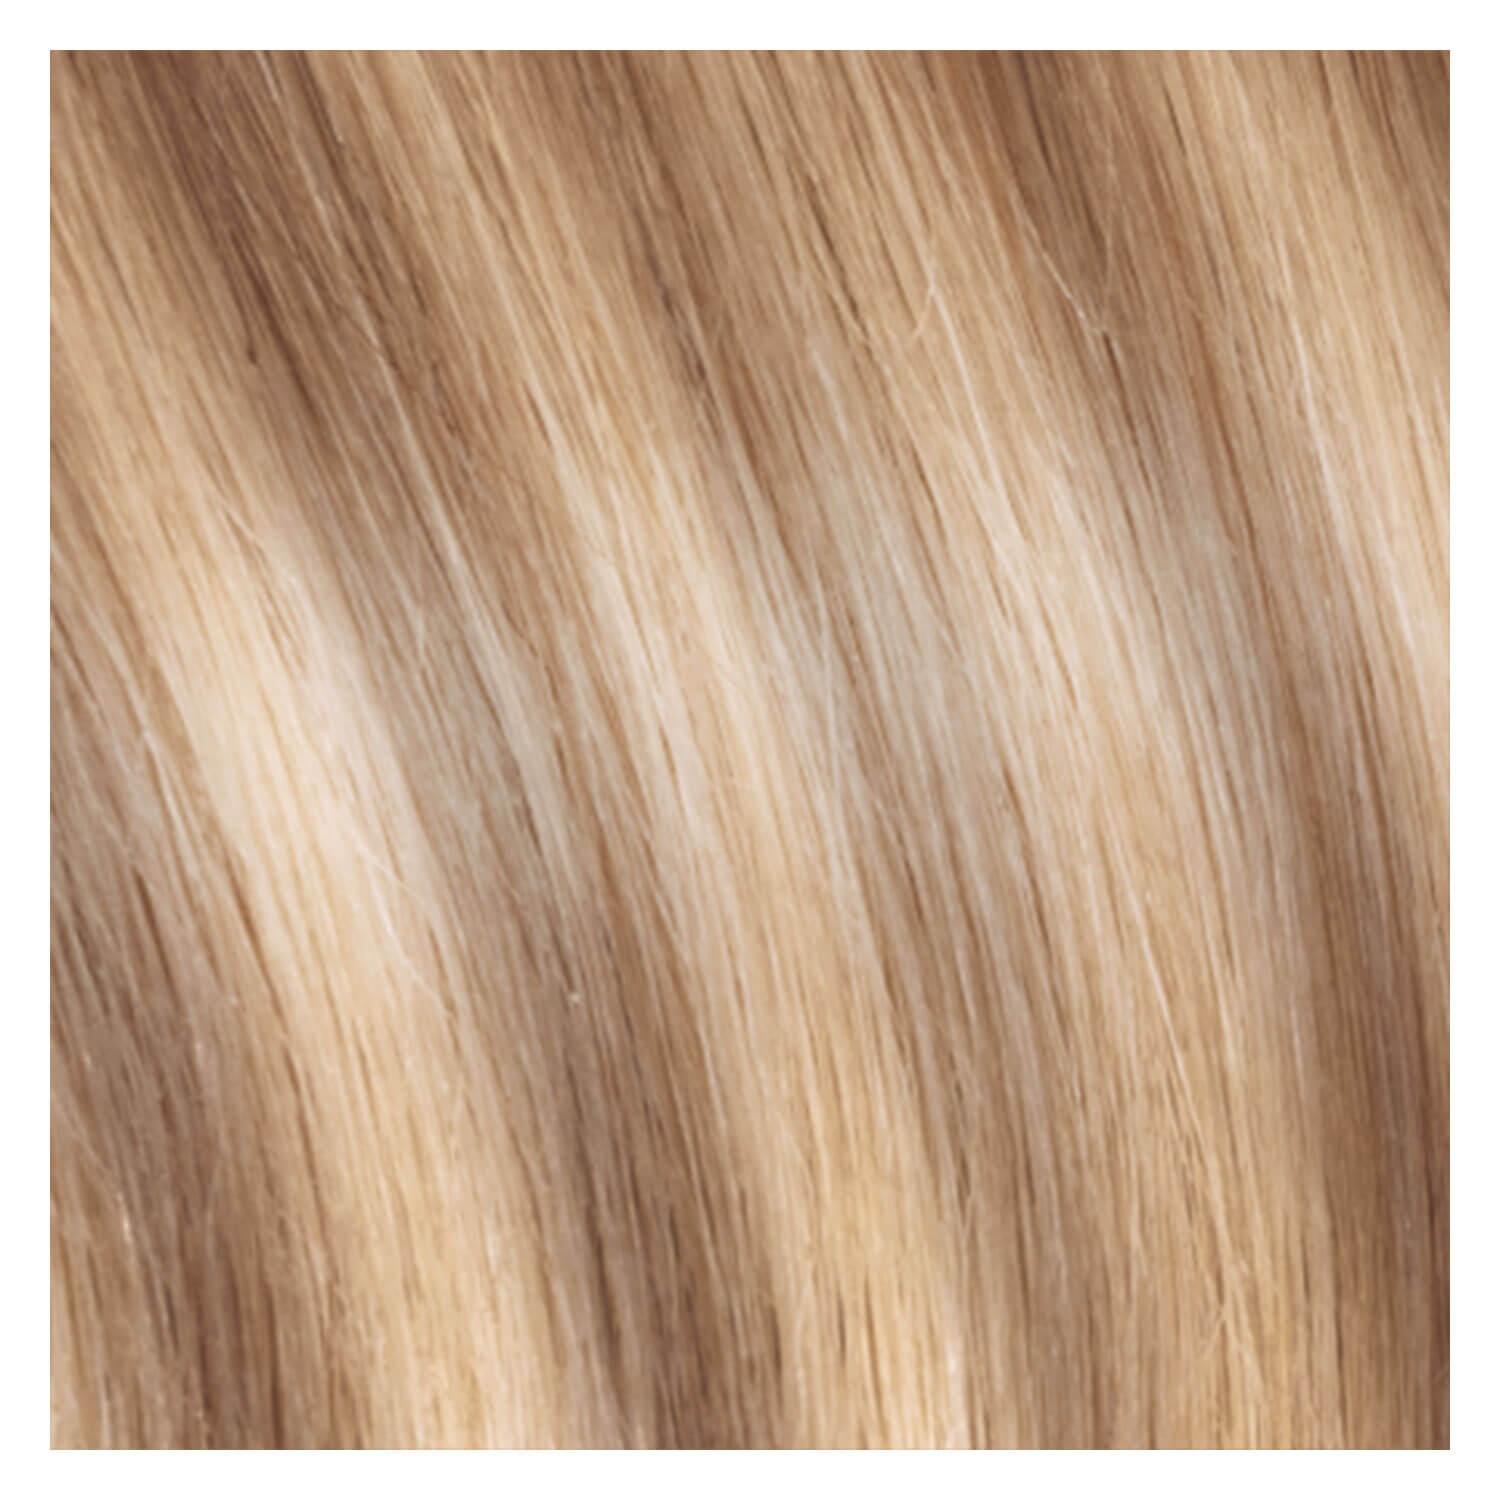 SHE Bonding-System Hair Extensions Straight - M20/27 Platinblond/Mittleres Goldblond 55/60cm